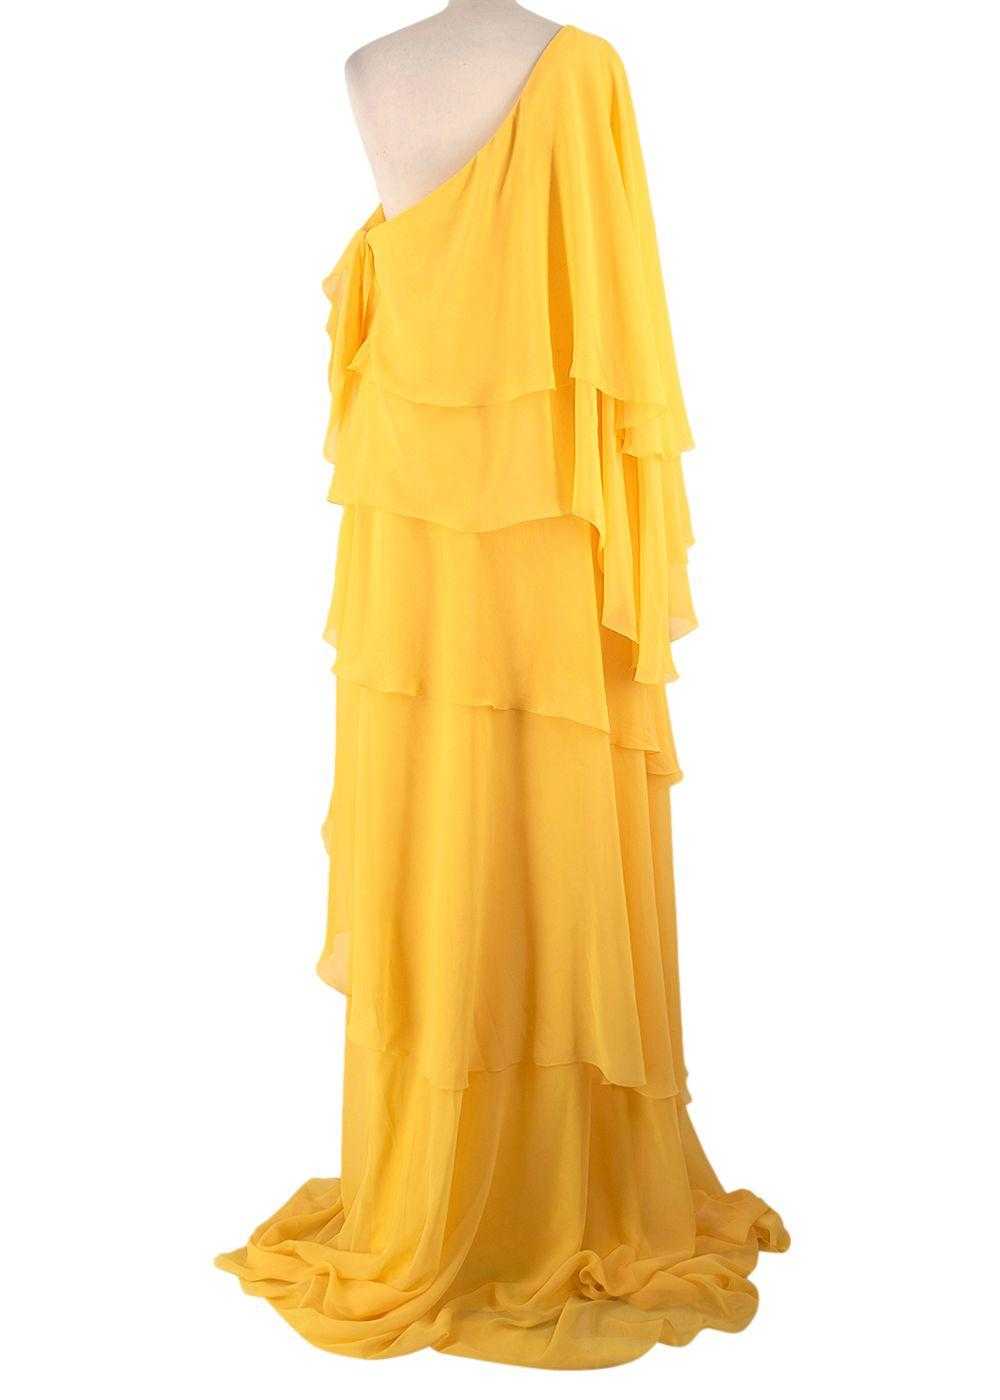 Honayda Honayda Yellow Asymmetric Ruffled Gown - image 2